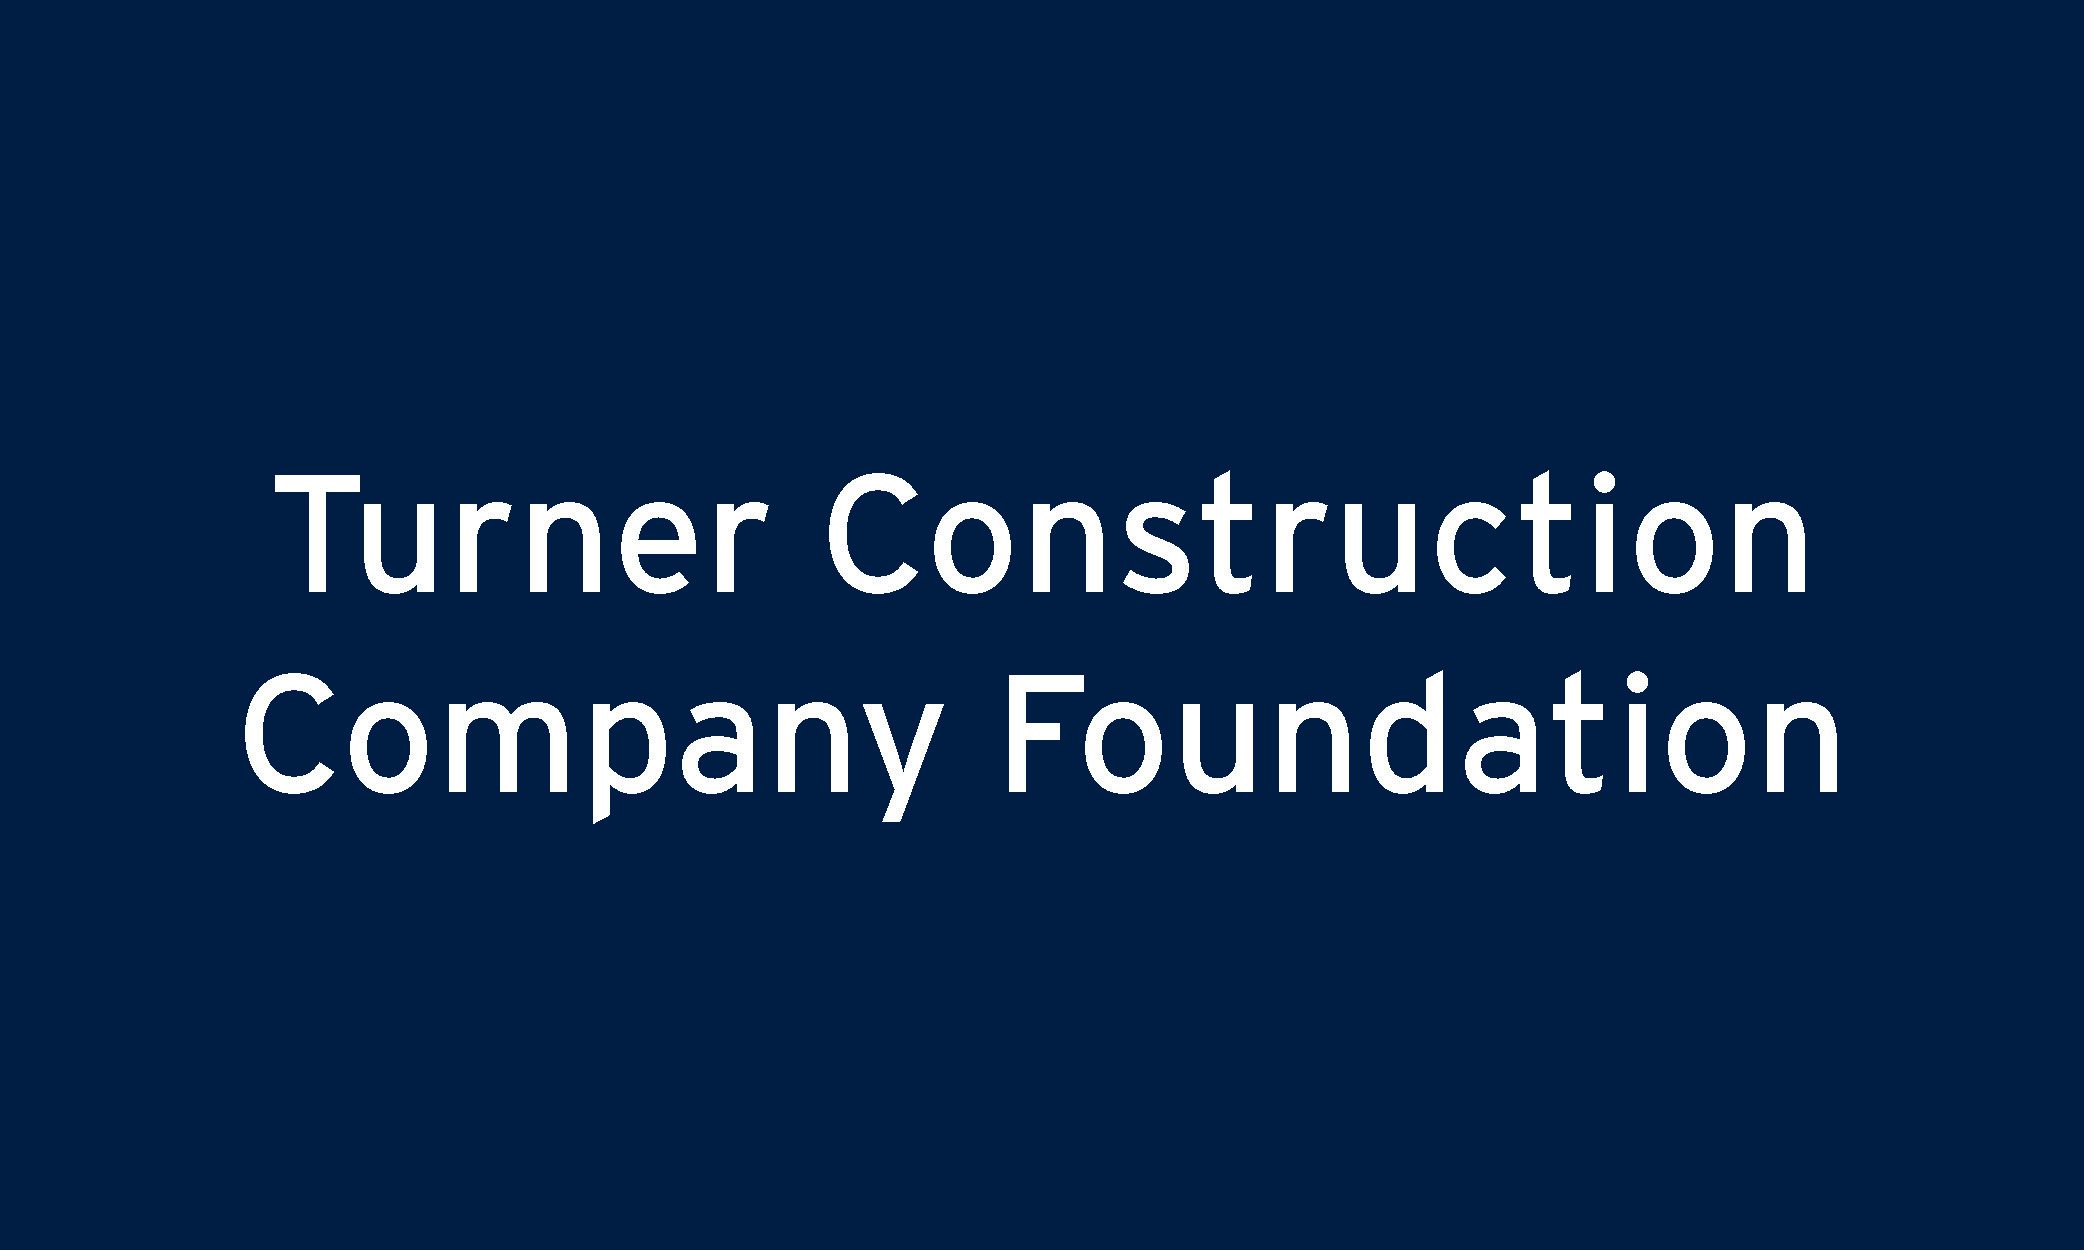 Turner Construction Company Foundation